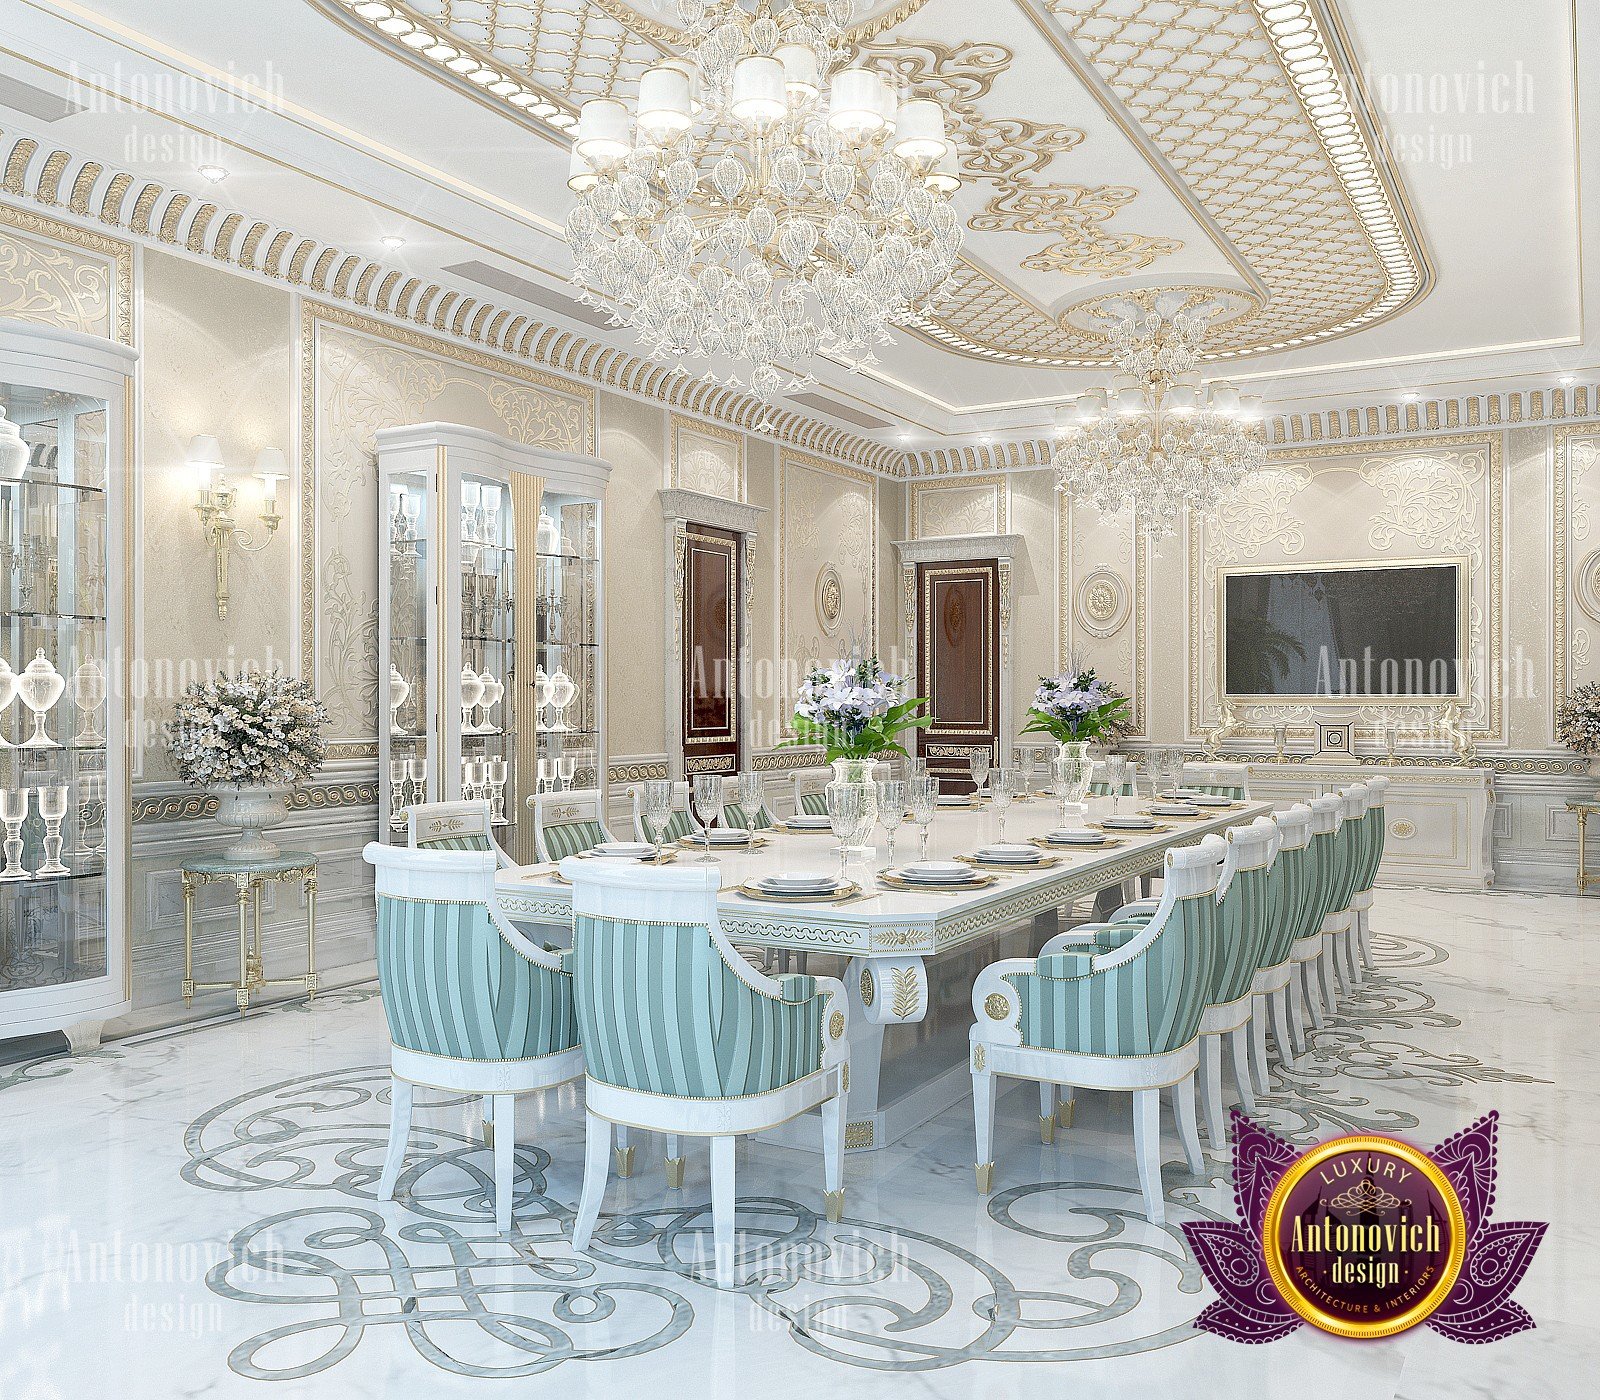 Best dining room design